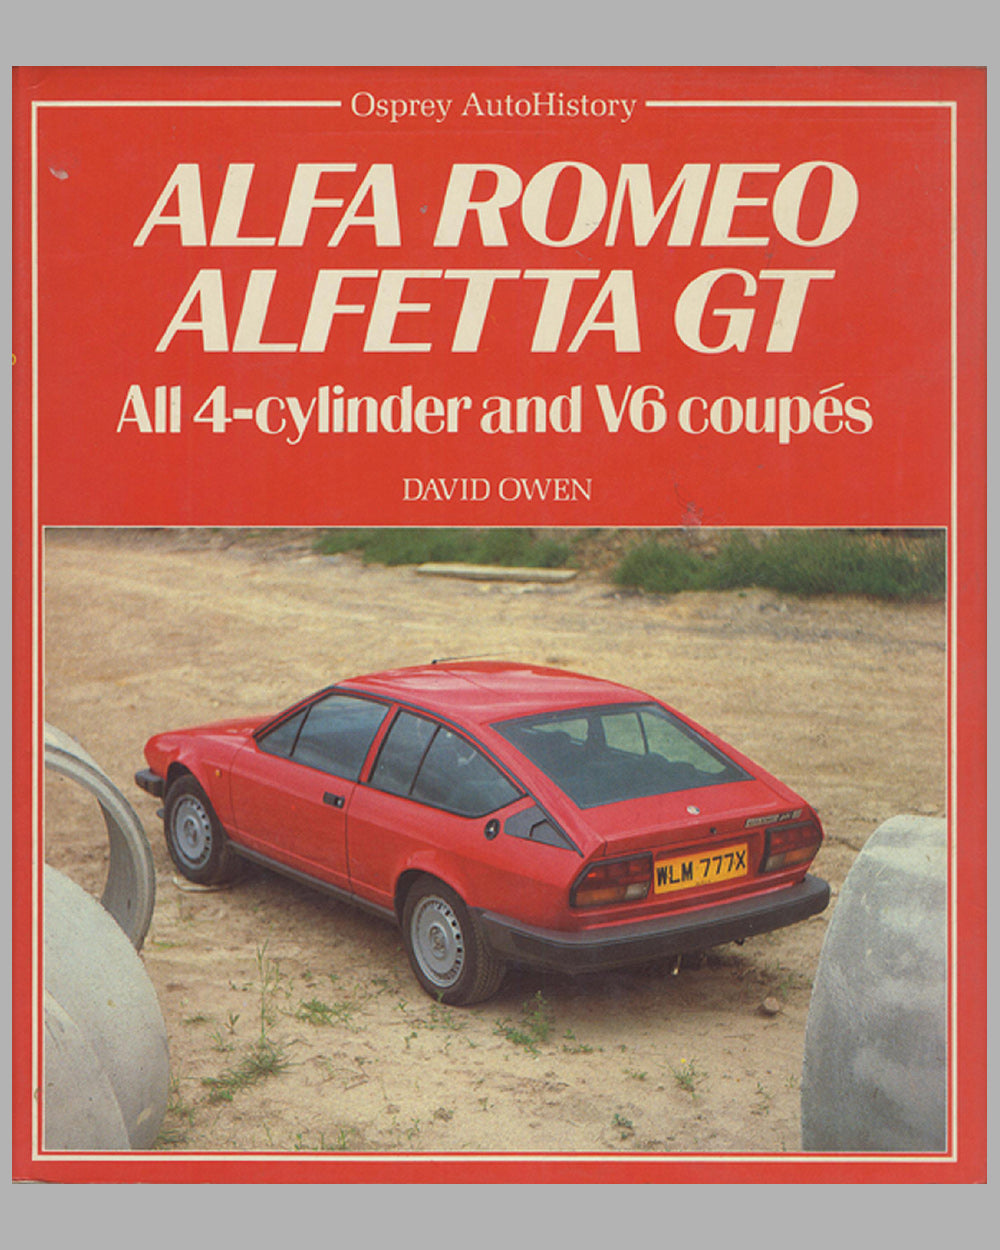 Alfa Romeo Alfetta GT 4 cyl. & V6 coupes book by David Owen, 1st ed